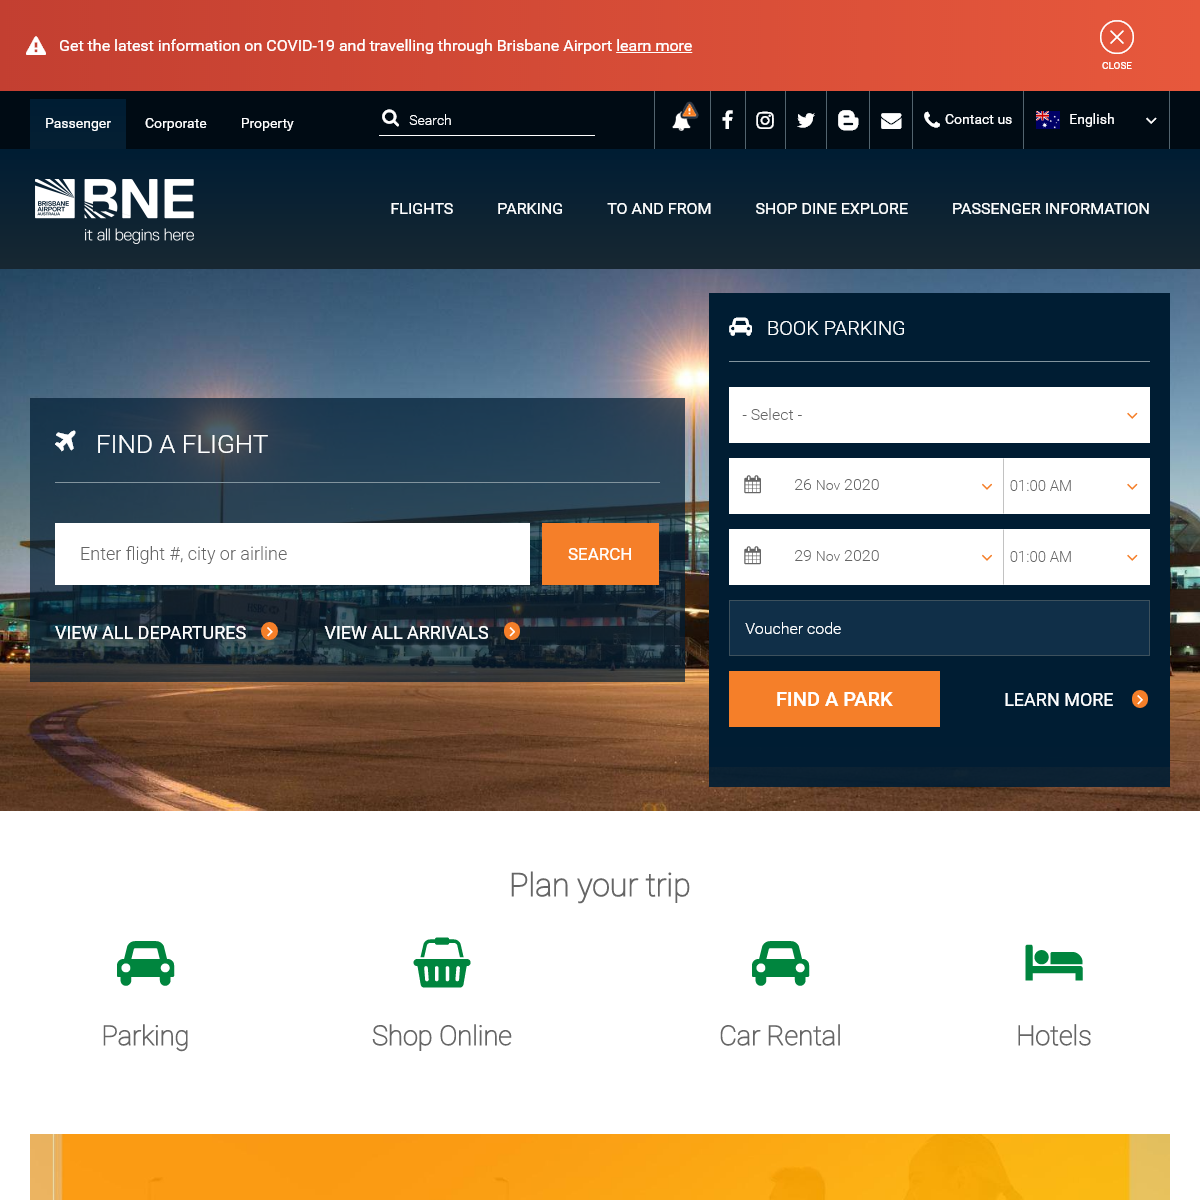 A complete backup of bne.com.au